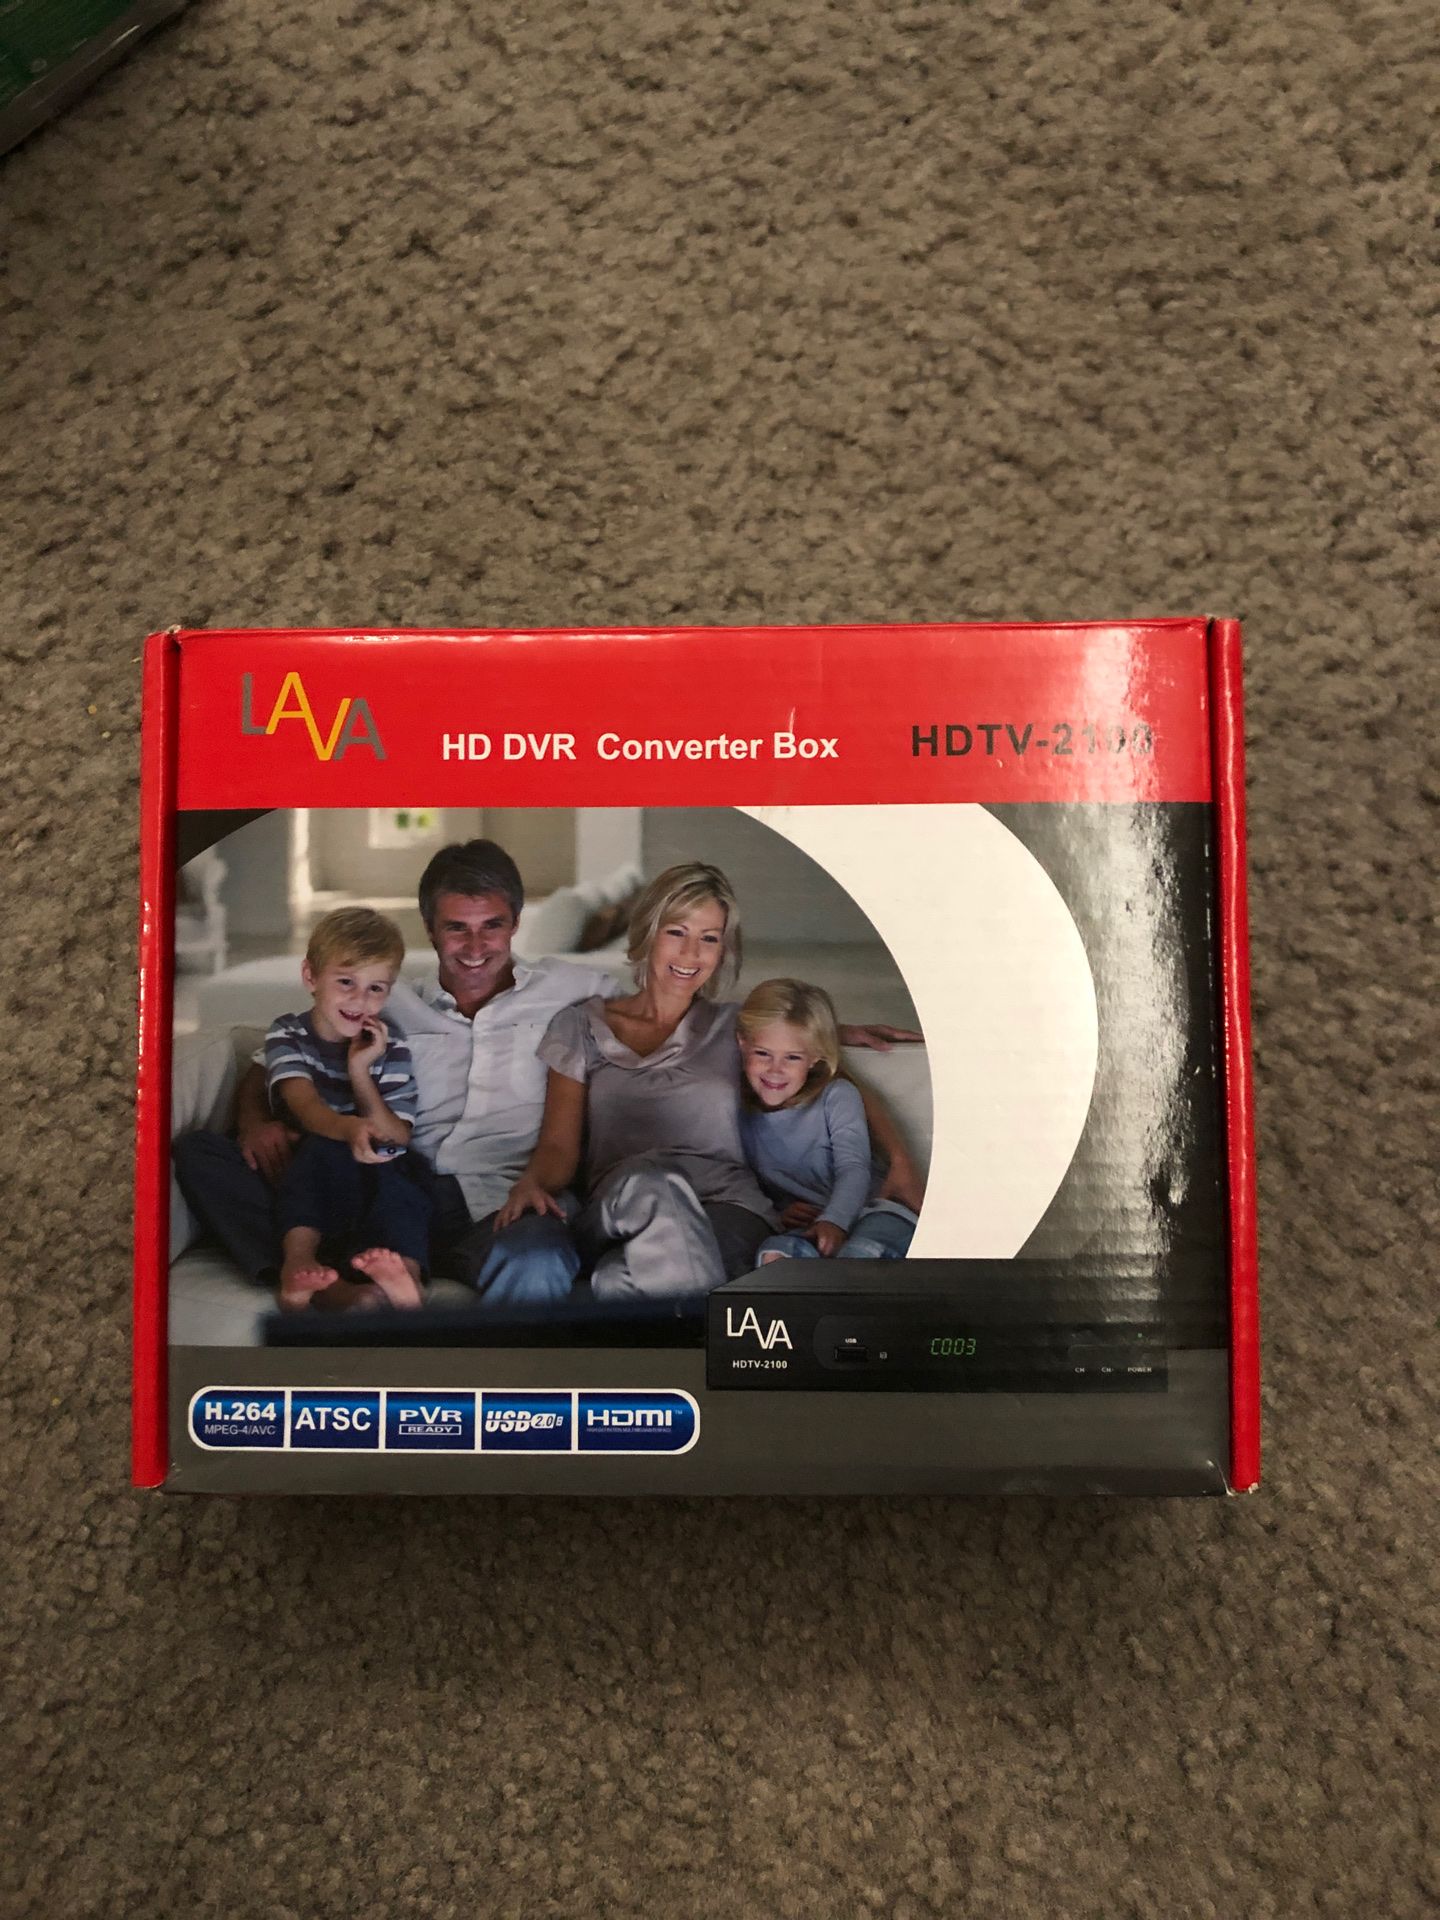 HD DVR Converter Box